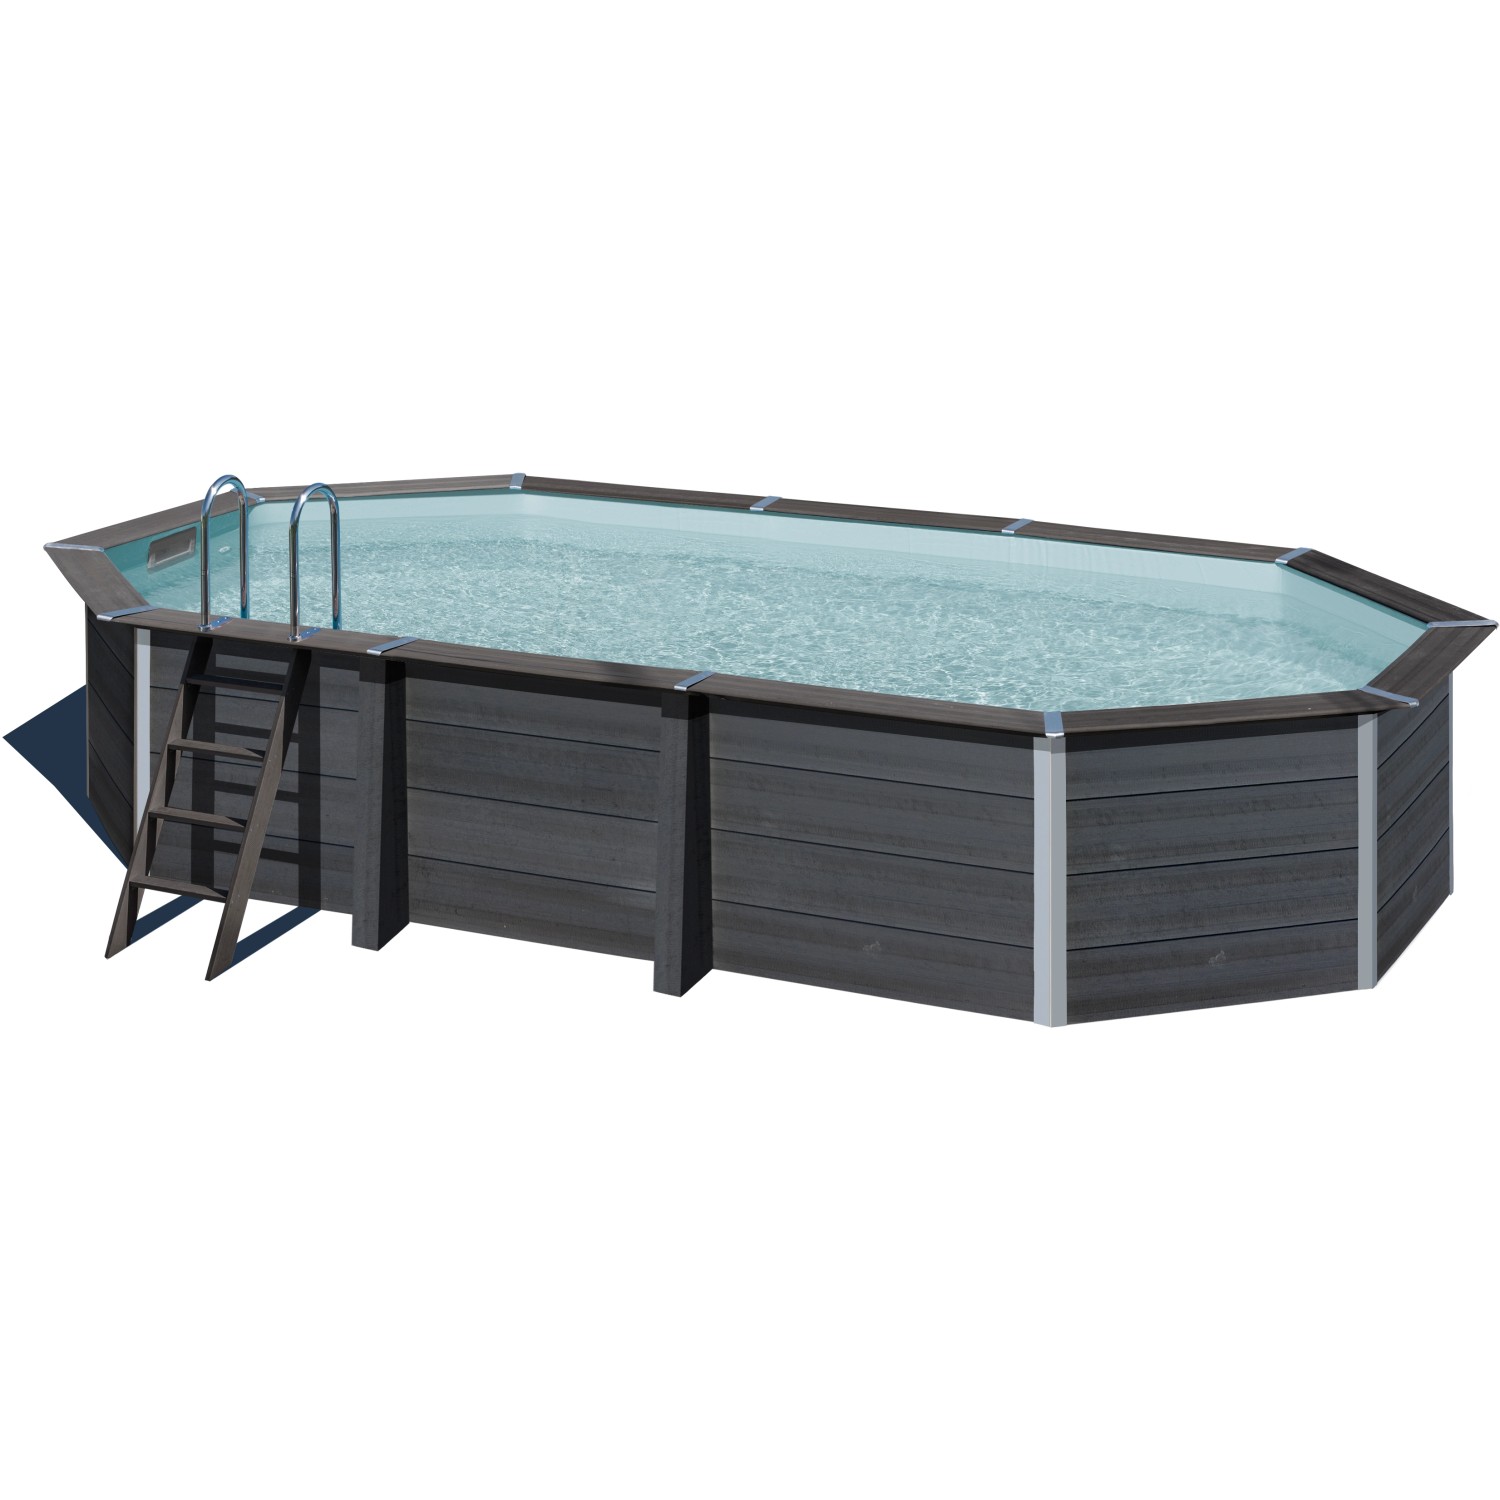 Gre Composite Pool Avantgarde Oval 664 cm x 386 cm x 124 cm